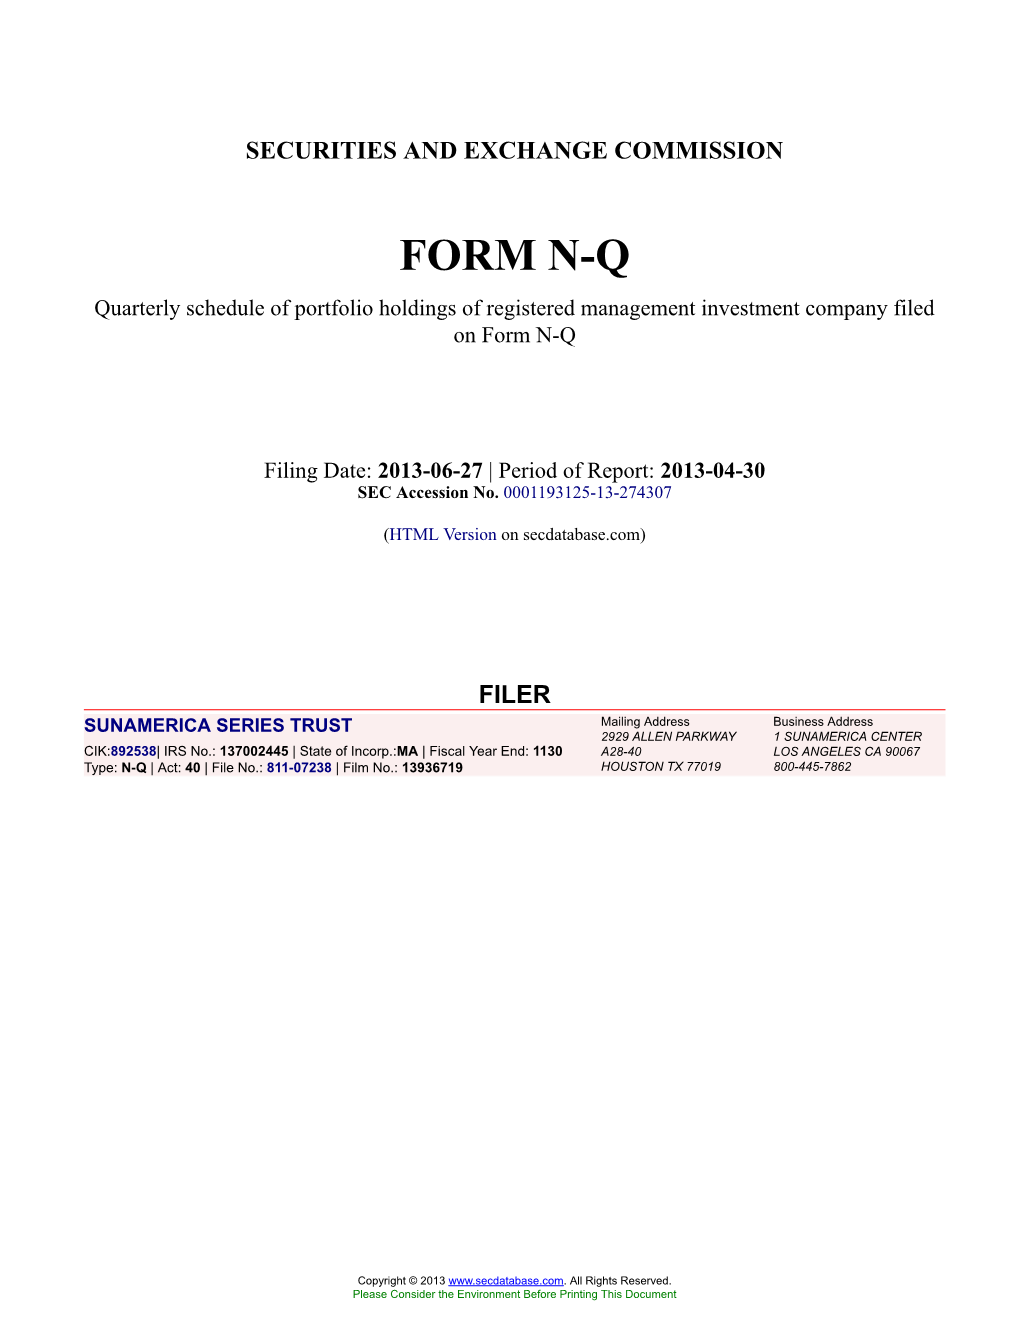 SUNAMERICA SERIES TRUST Form N-Q Filed 2013-06-27